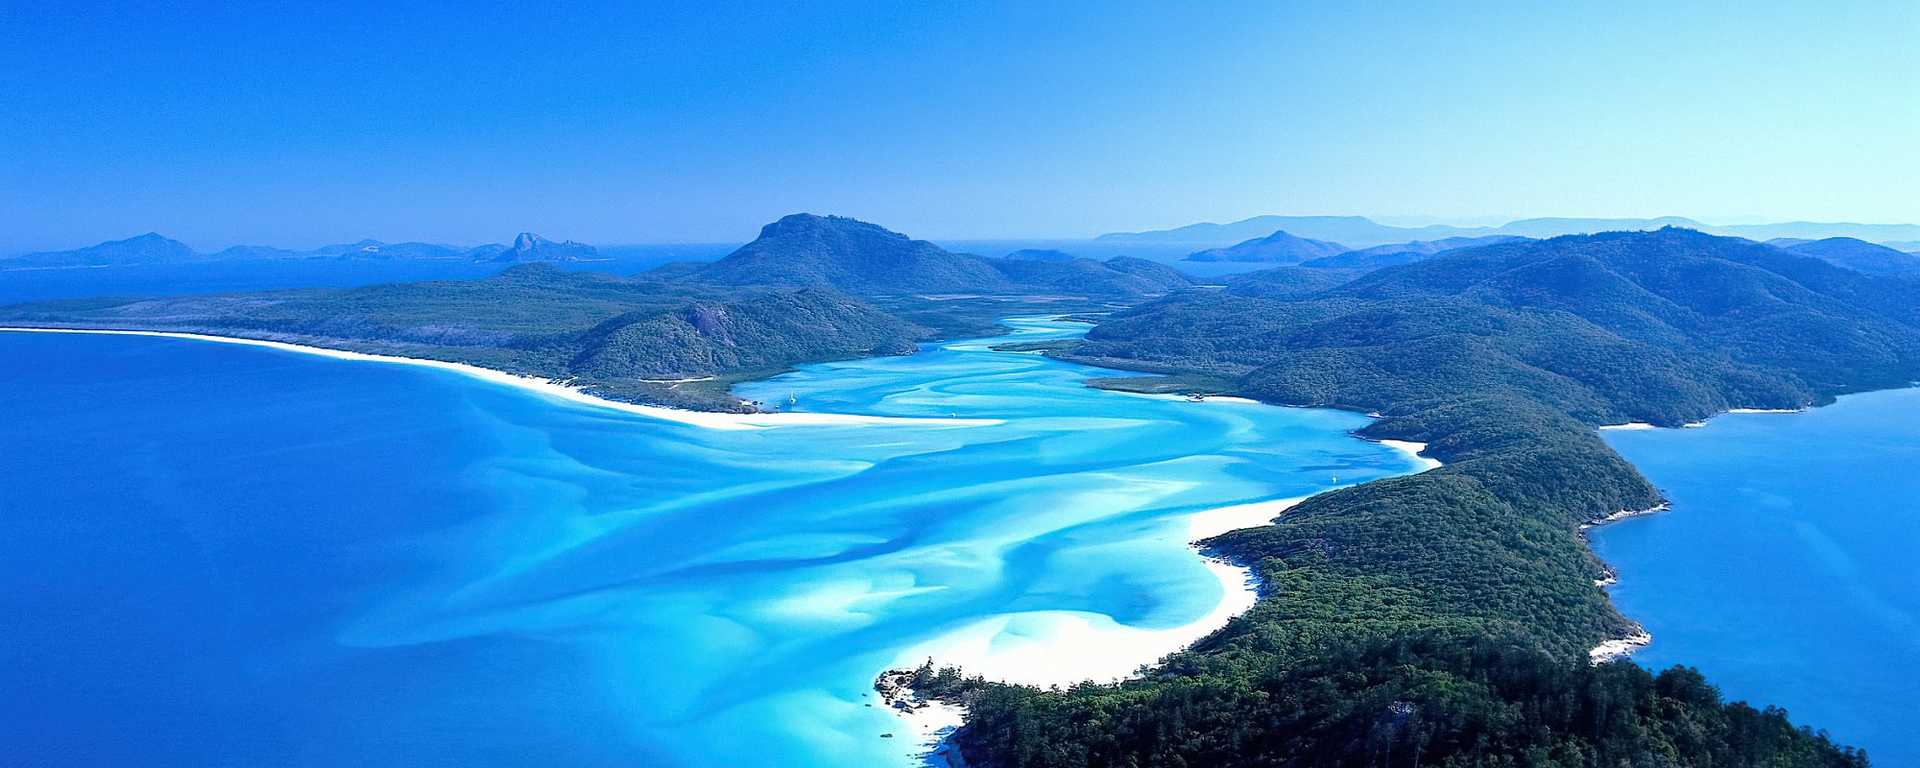 Whitsunday Islands in Australia. Photo courtesy of Tourism Australia